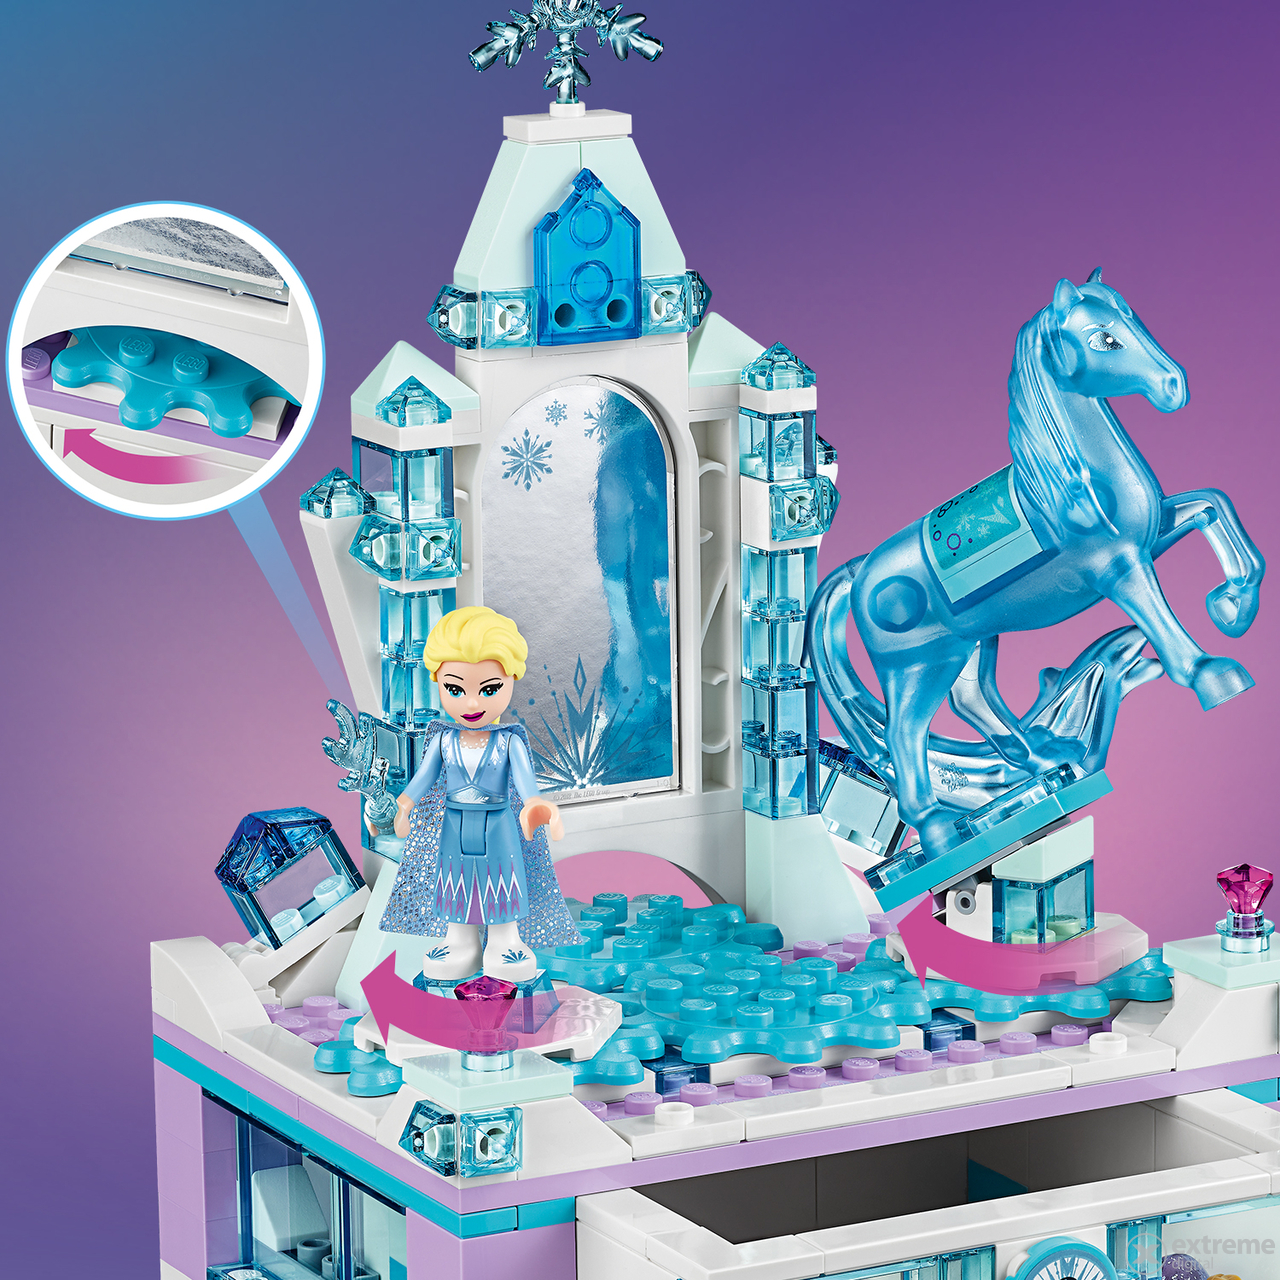 LEGO® Disney Princess  - Elsas Schmuckkästchen (41168)